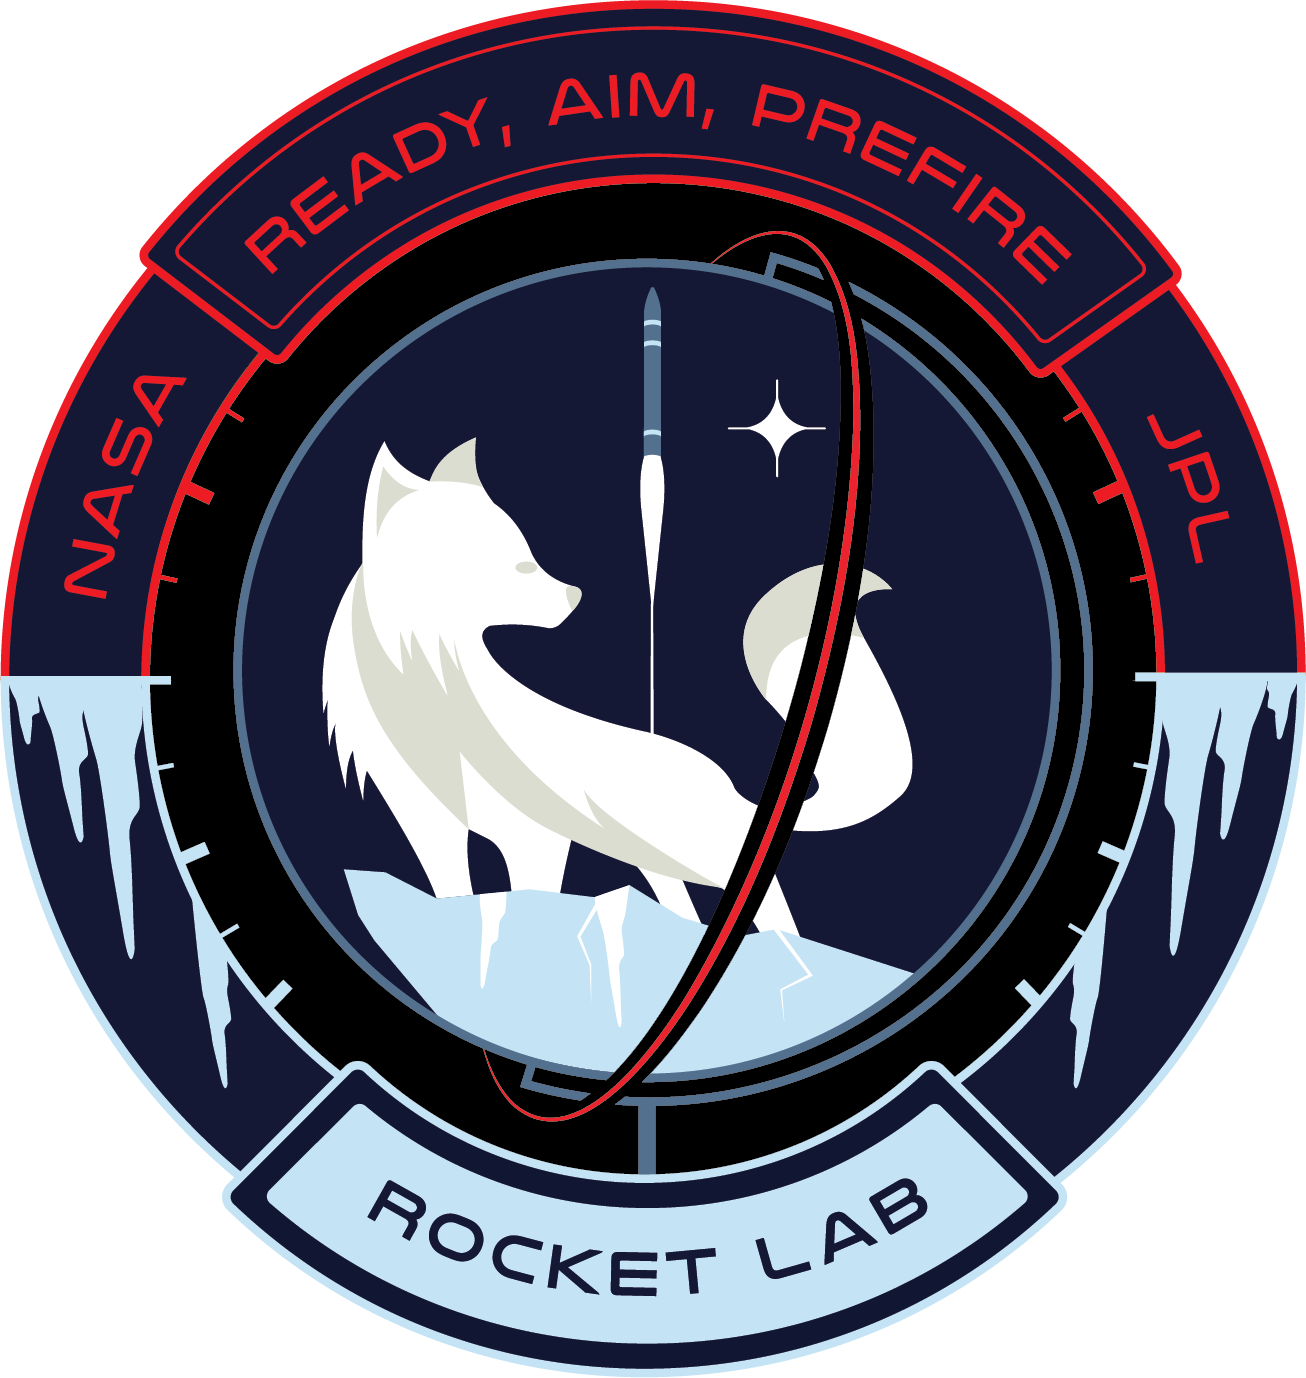 Rocket Lab Ready, Aim, PREFIRE Mission Patch